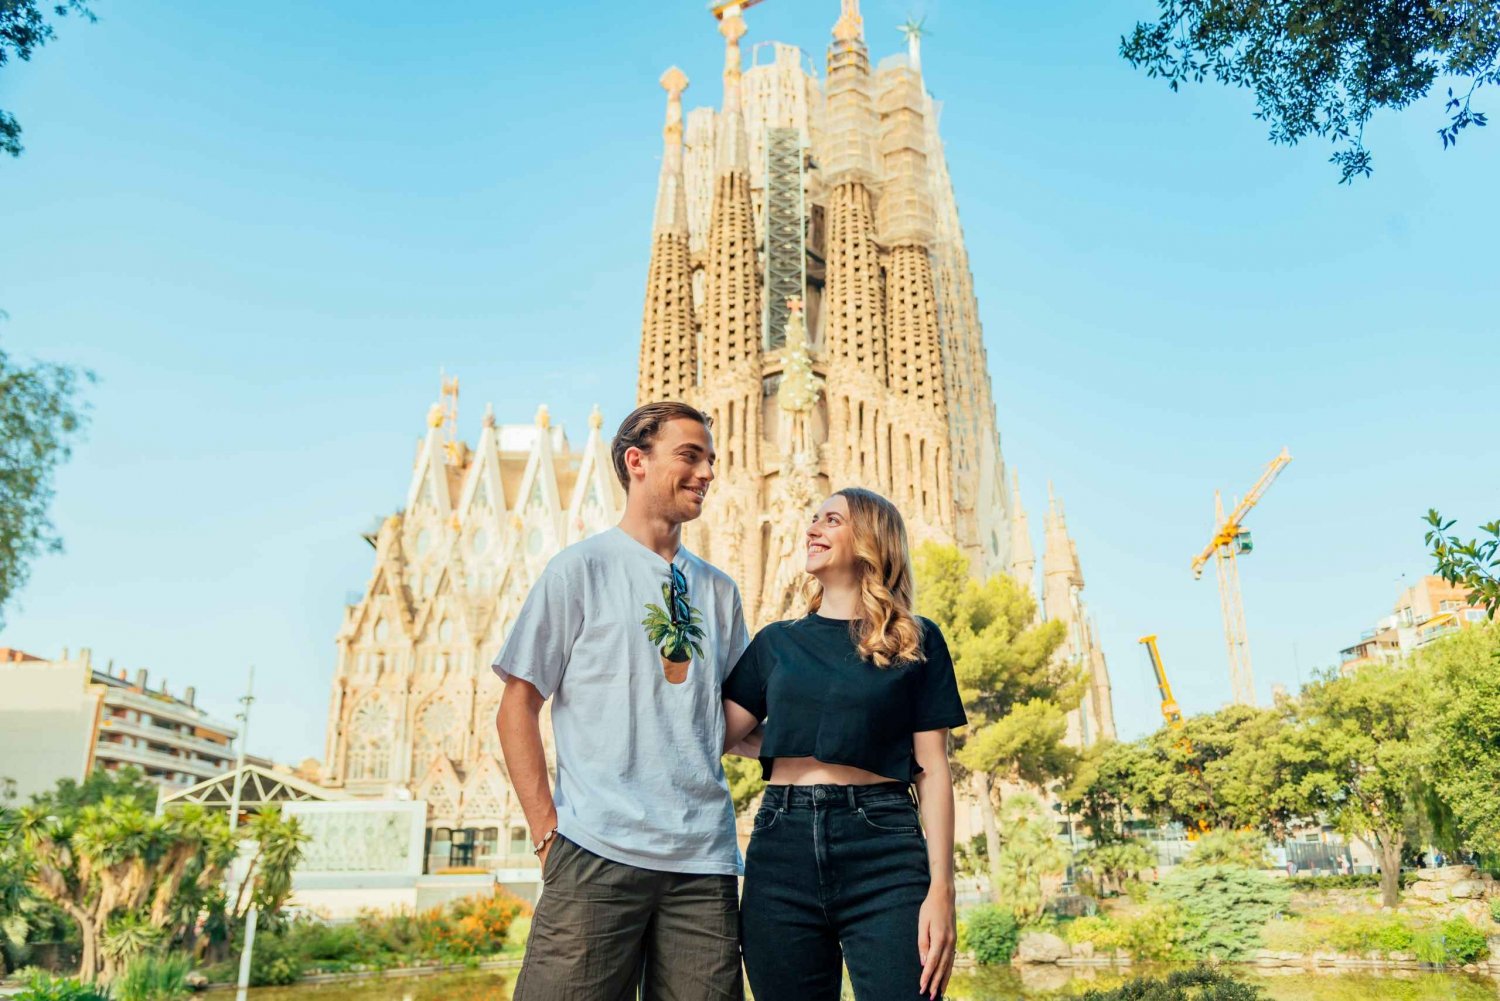 Barcelona: Dein eigenes privates Fotoshooting an der Sagrada Familia